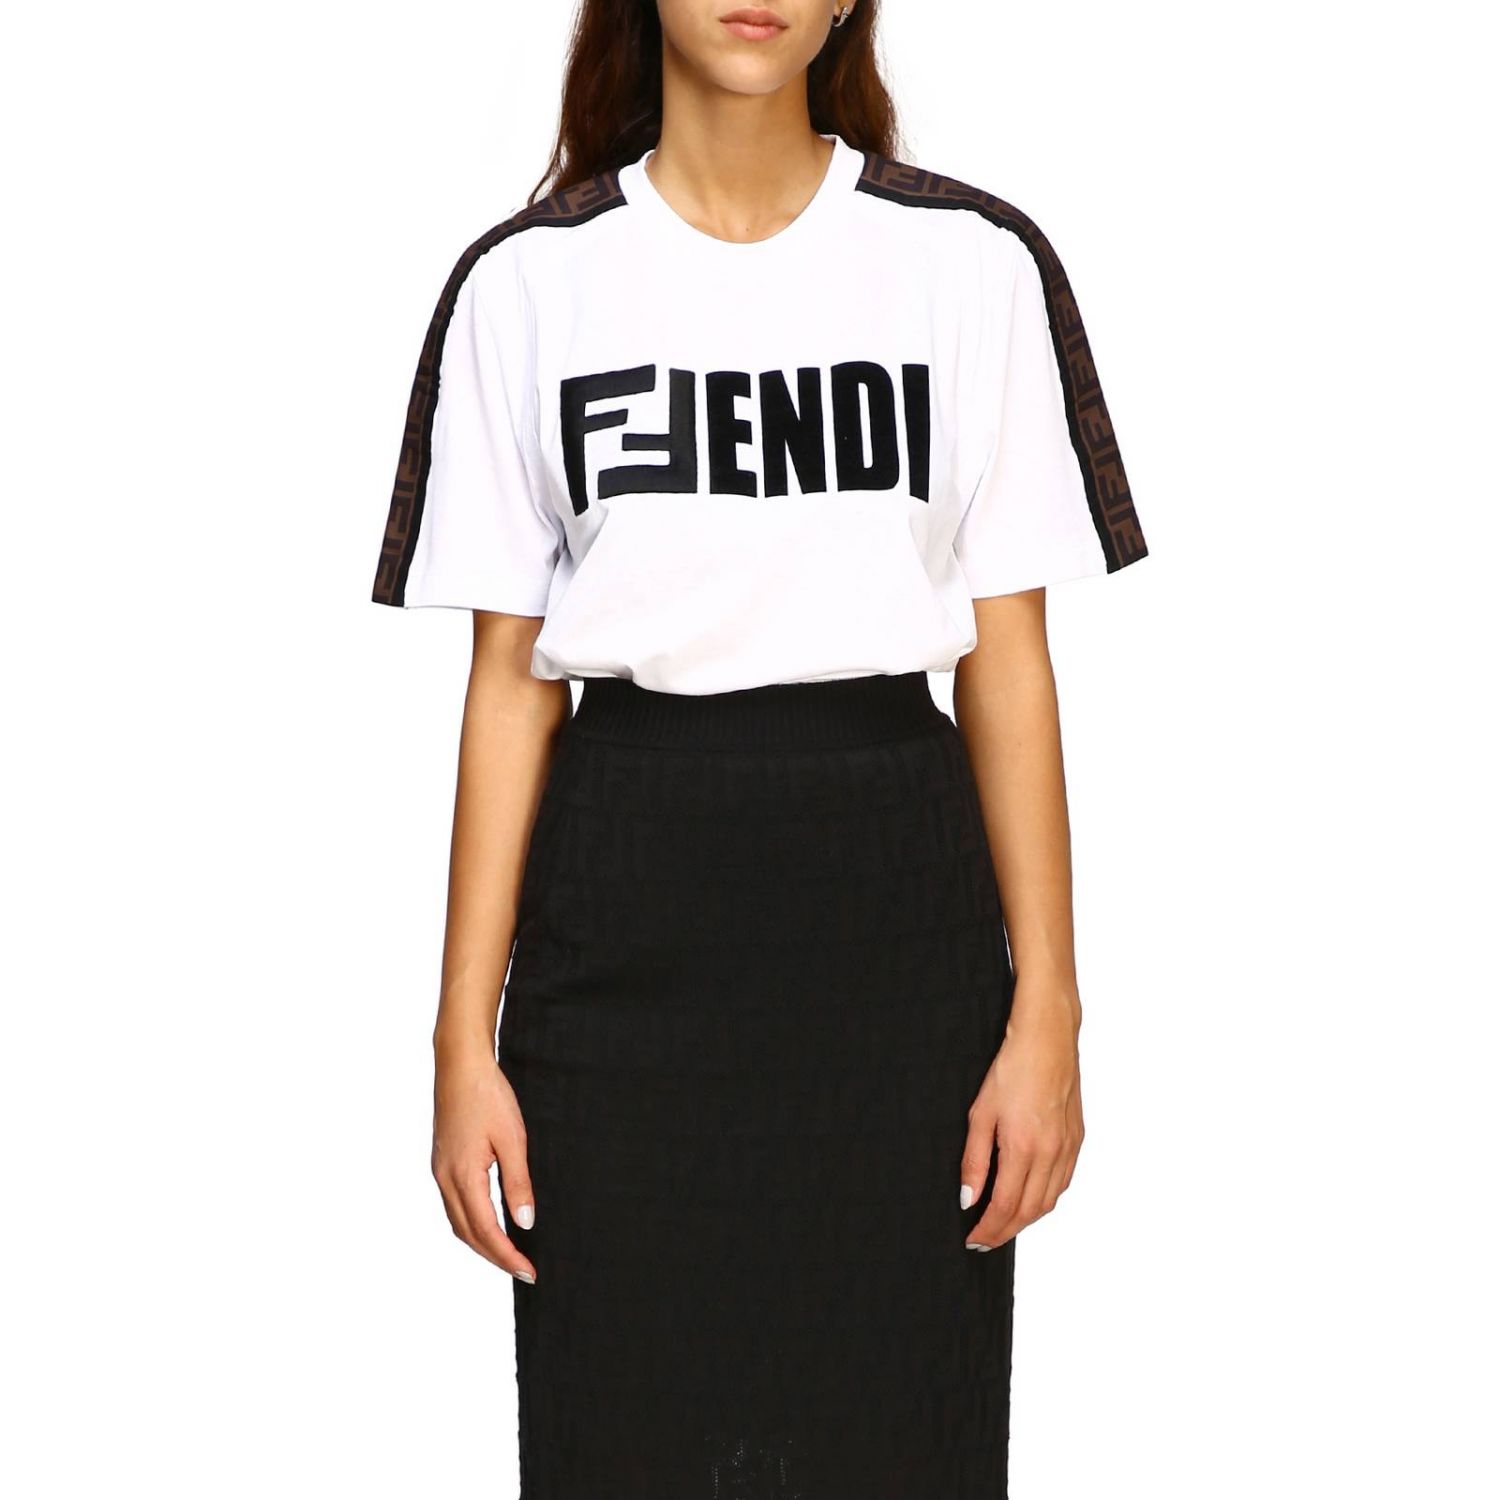 Fendi Shirt Womens Outlet, 54% OFF | www.hcb.cat